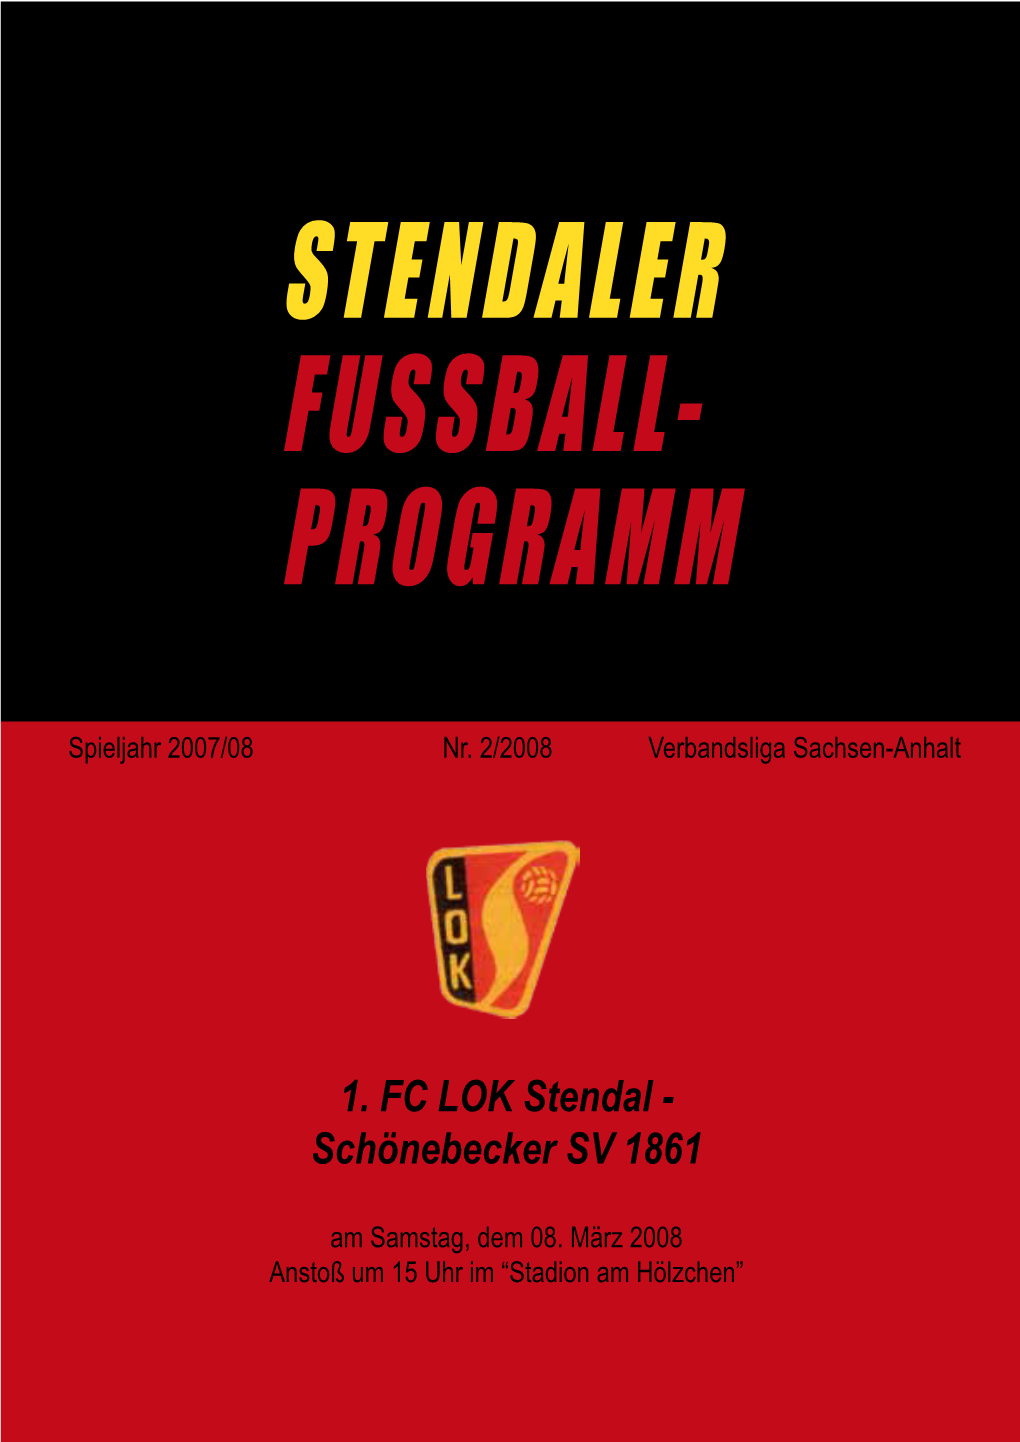 Stendaler Fussball- Programm